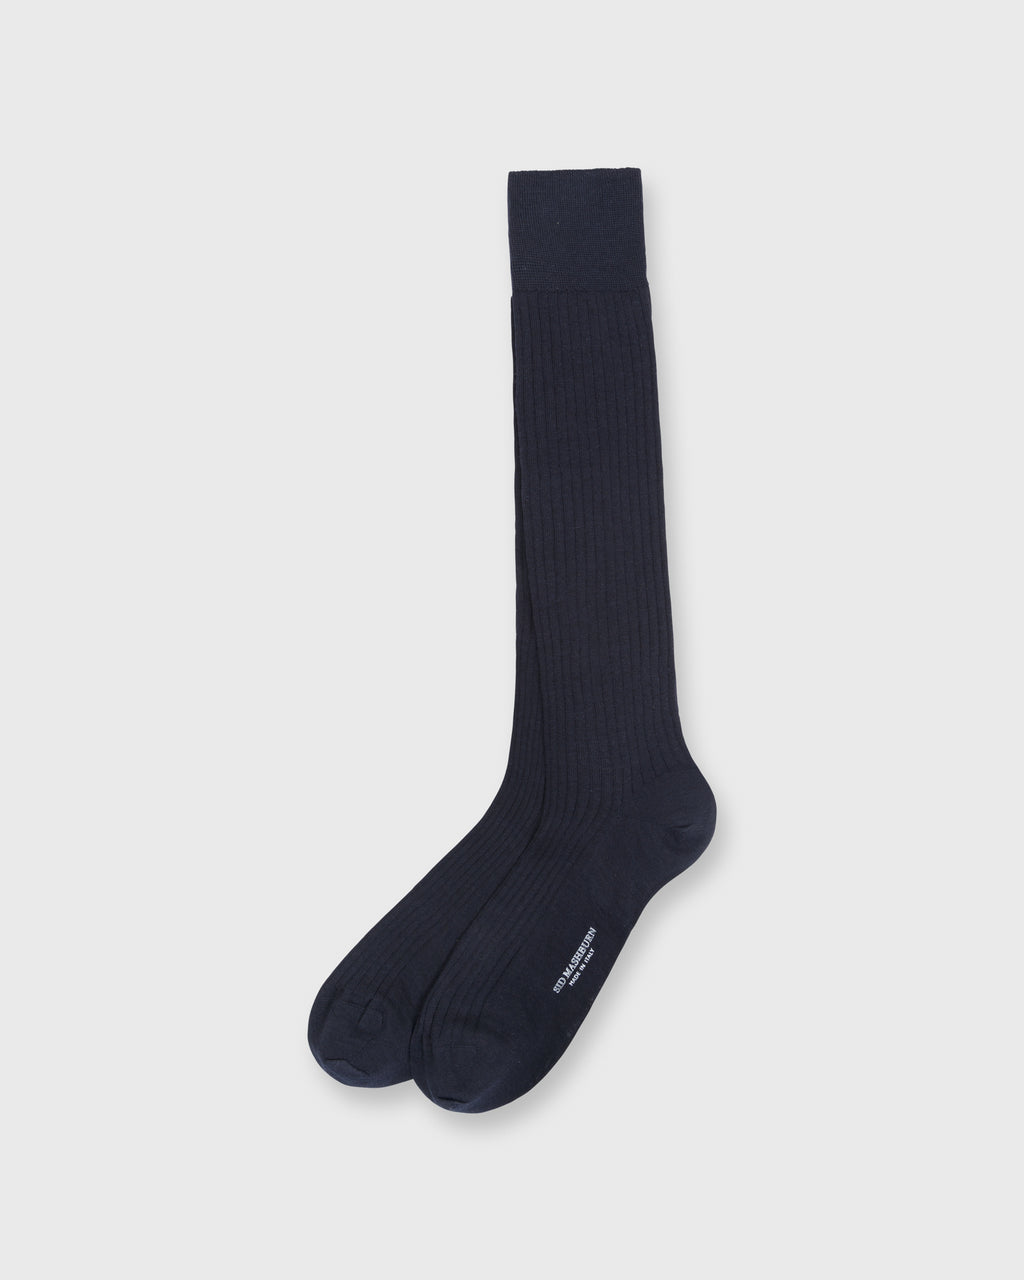 Over-The-Calf Dress Socks Navy Extra Fine Merino